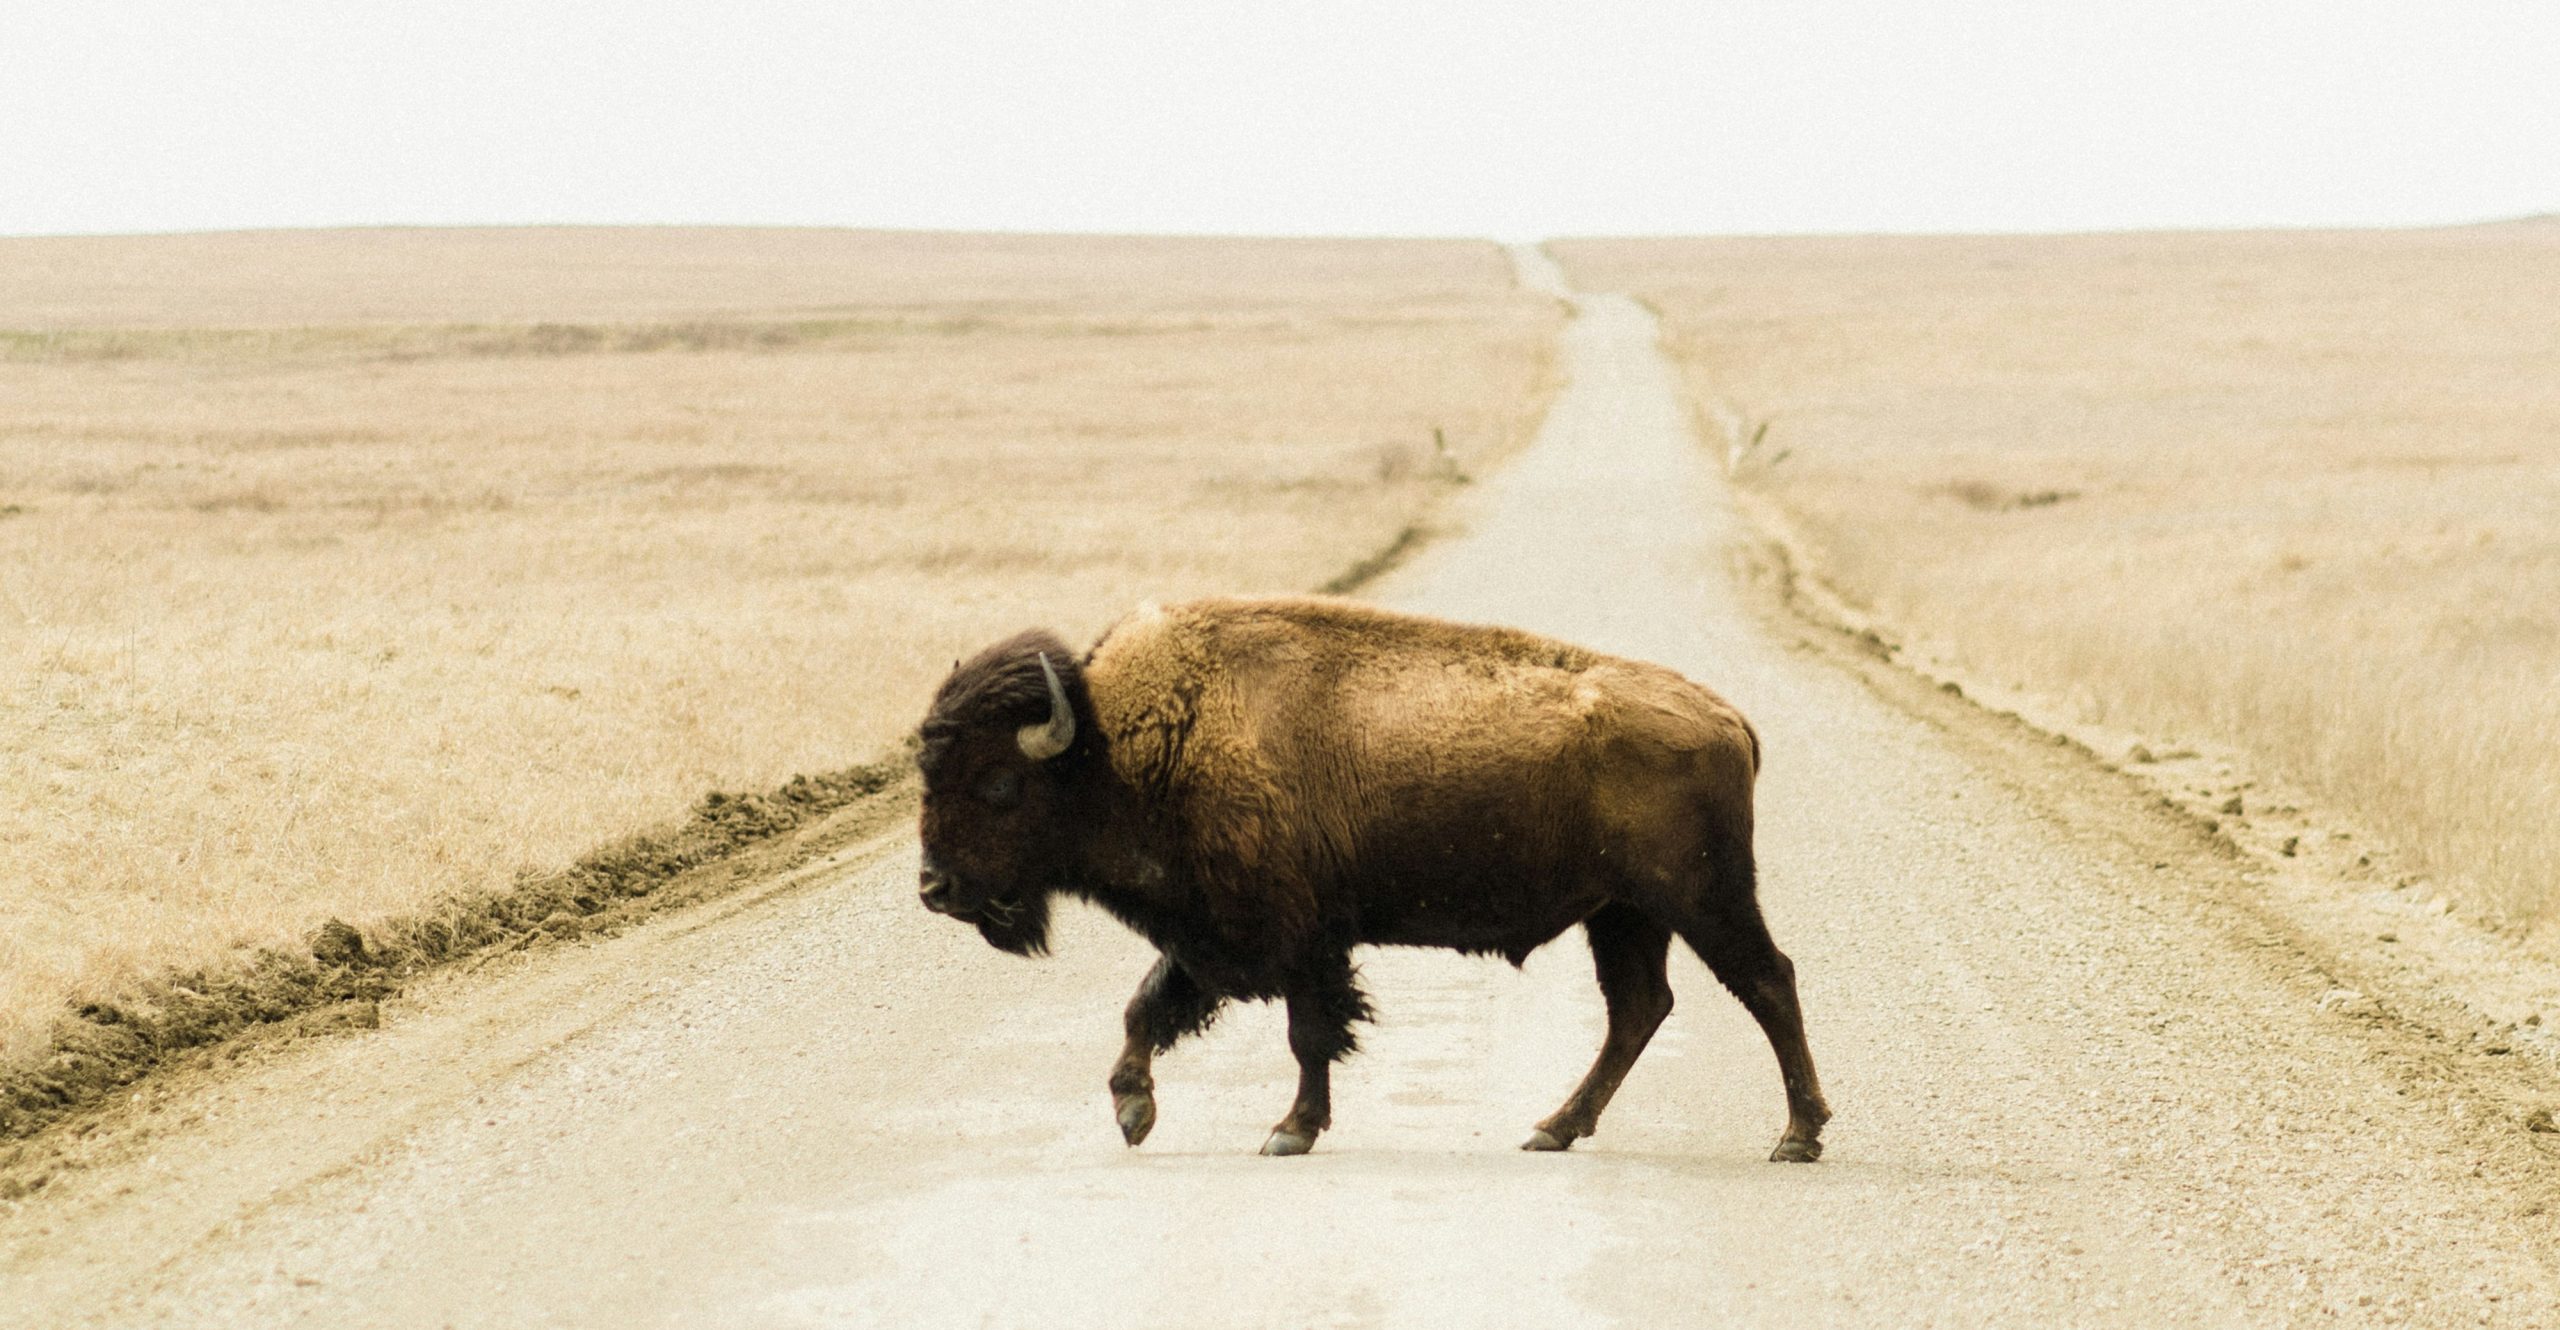 buffalo walks across a road